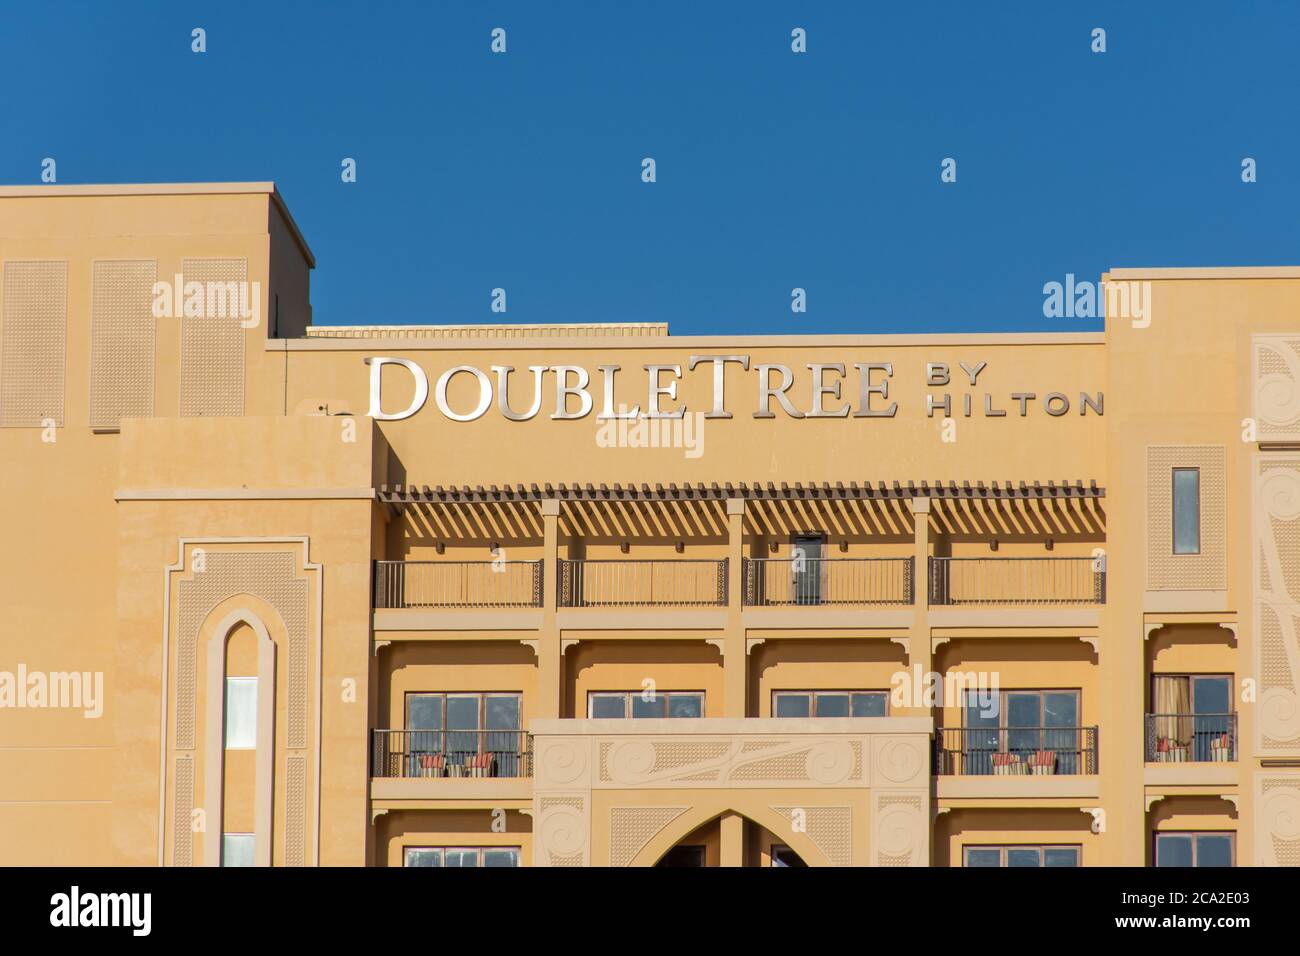 "Ras al Khaimah, Ras al Khaimah/United Arab Emirates - 2/14/2020: "Hilton Double Tree Hotel close up of building sign against blue sky background Marj Stock Photo